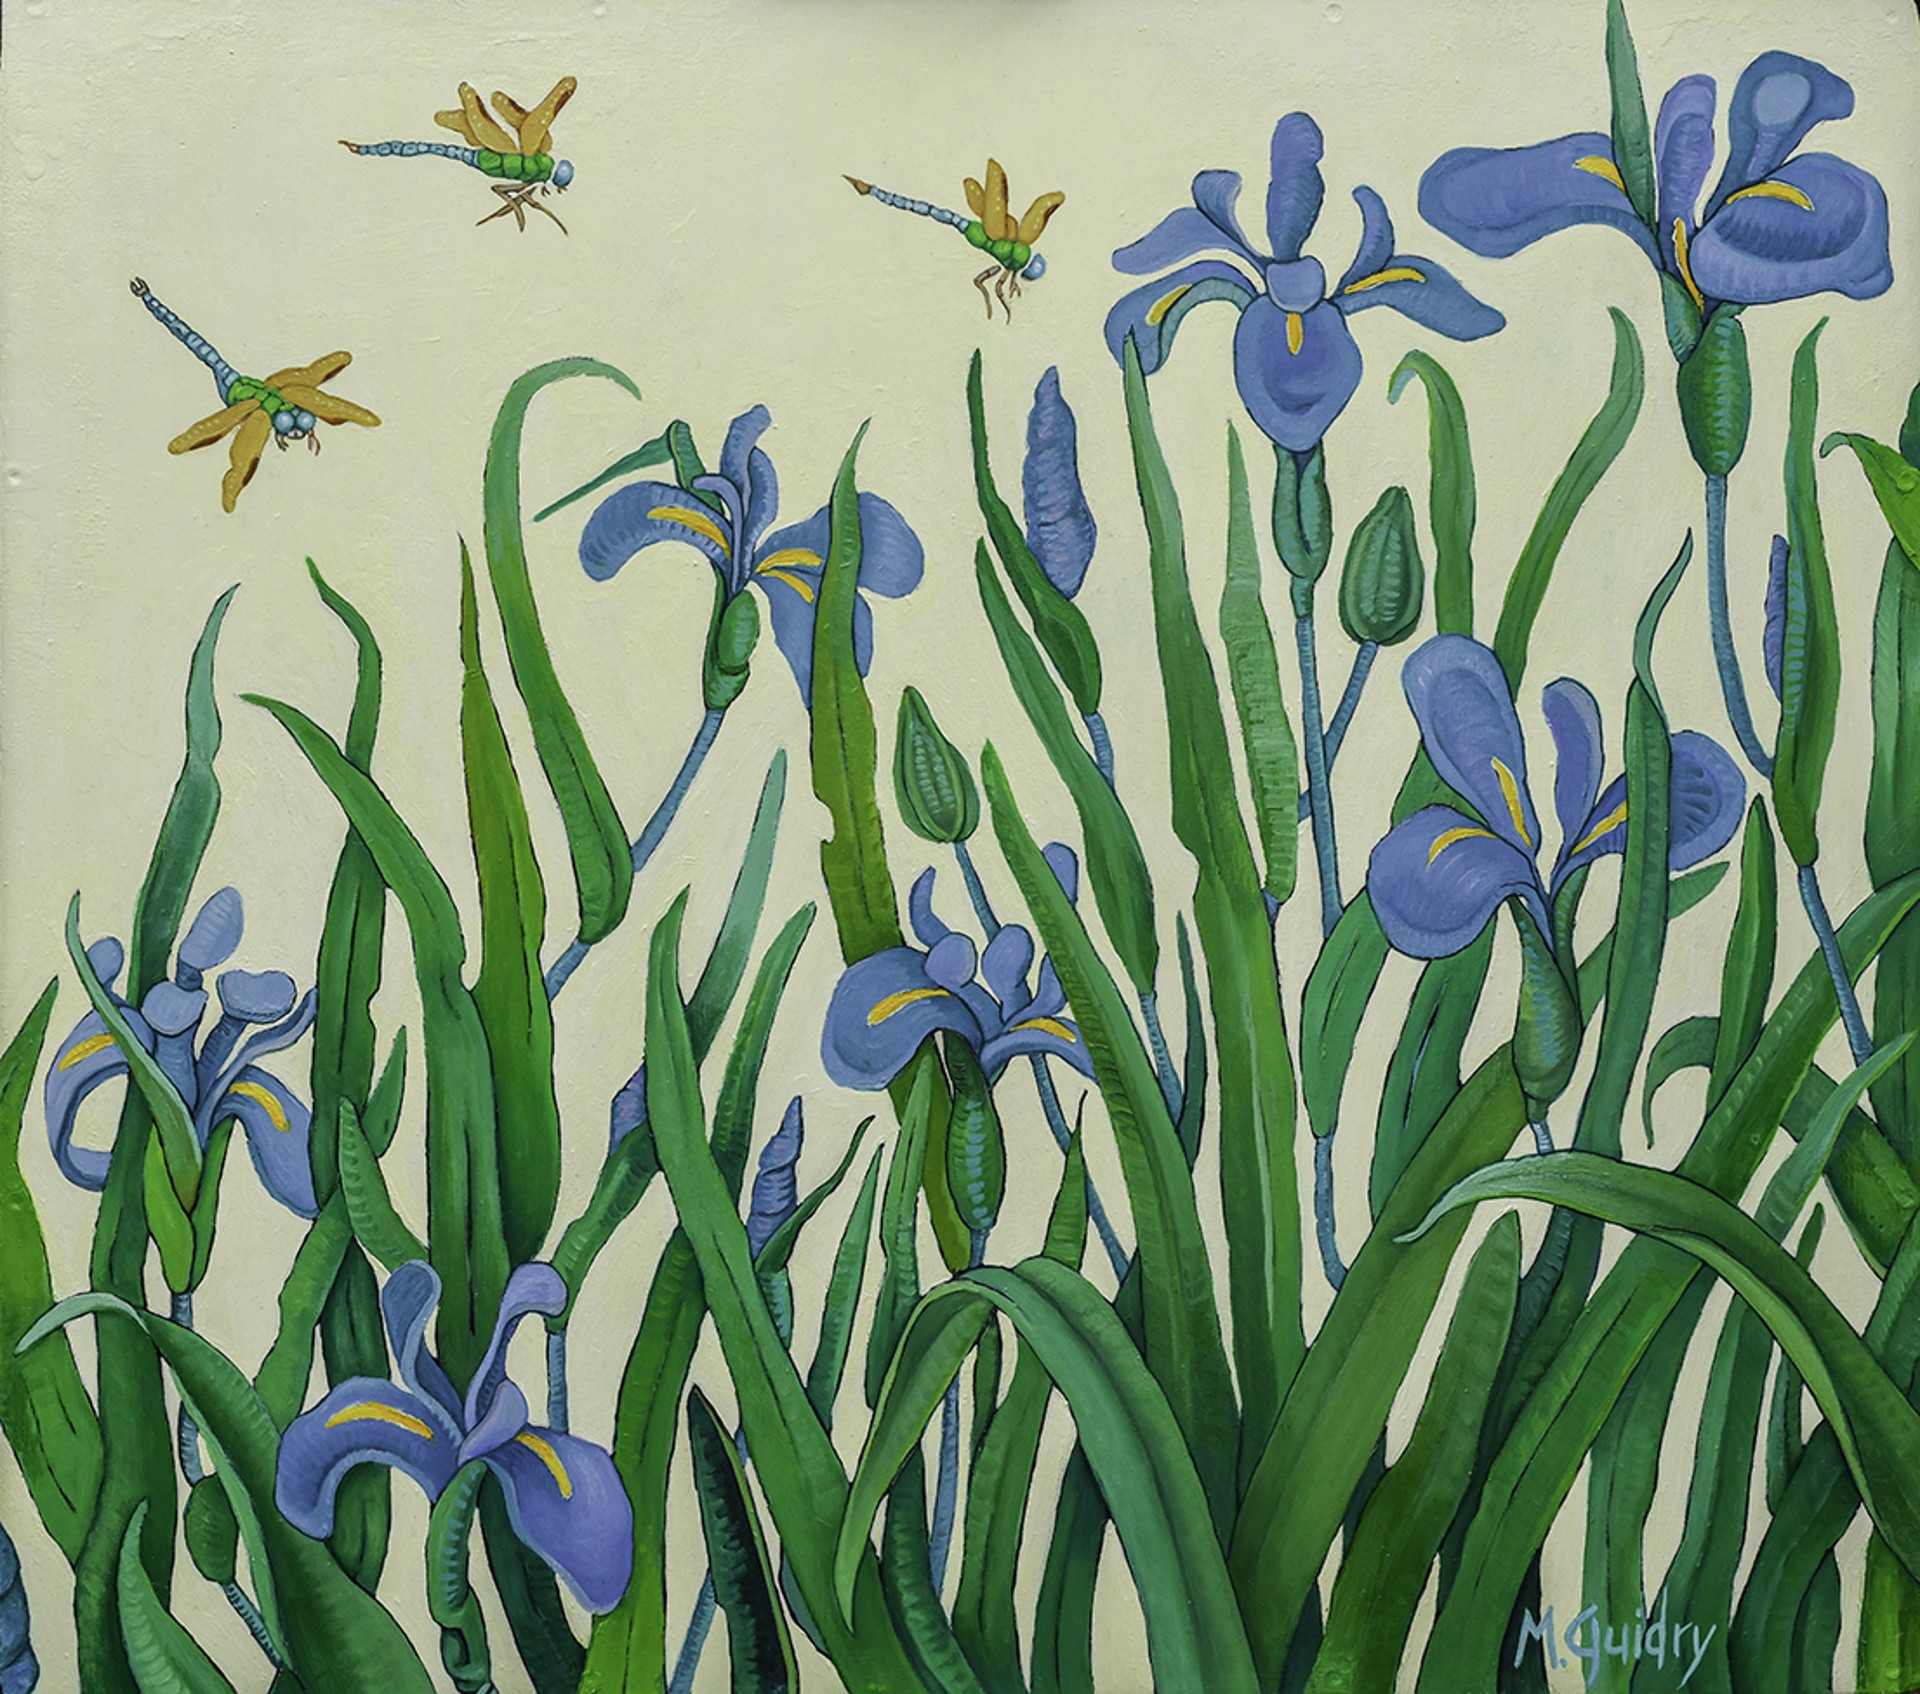 Louisiana Iris, Dragonflies by Michael Guidry